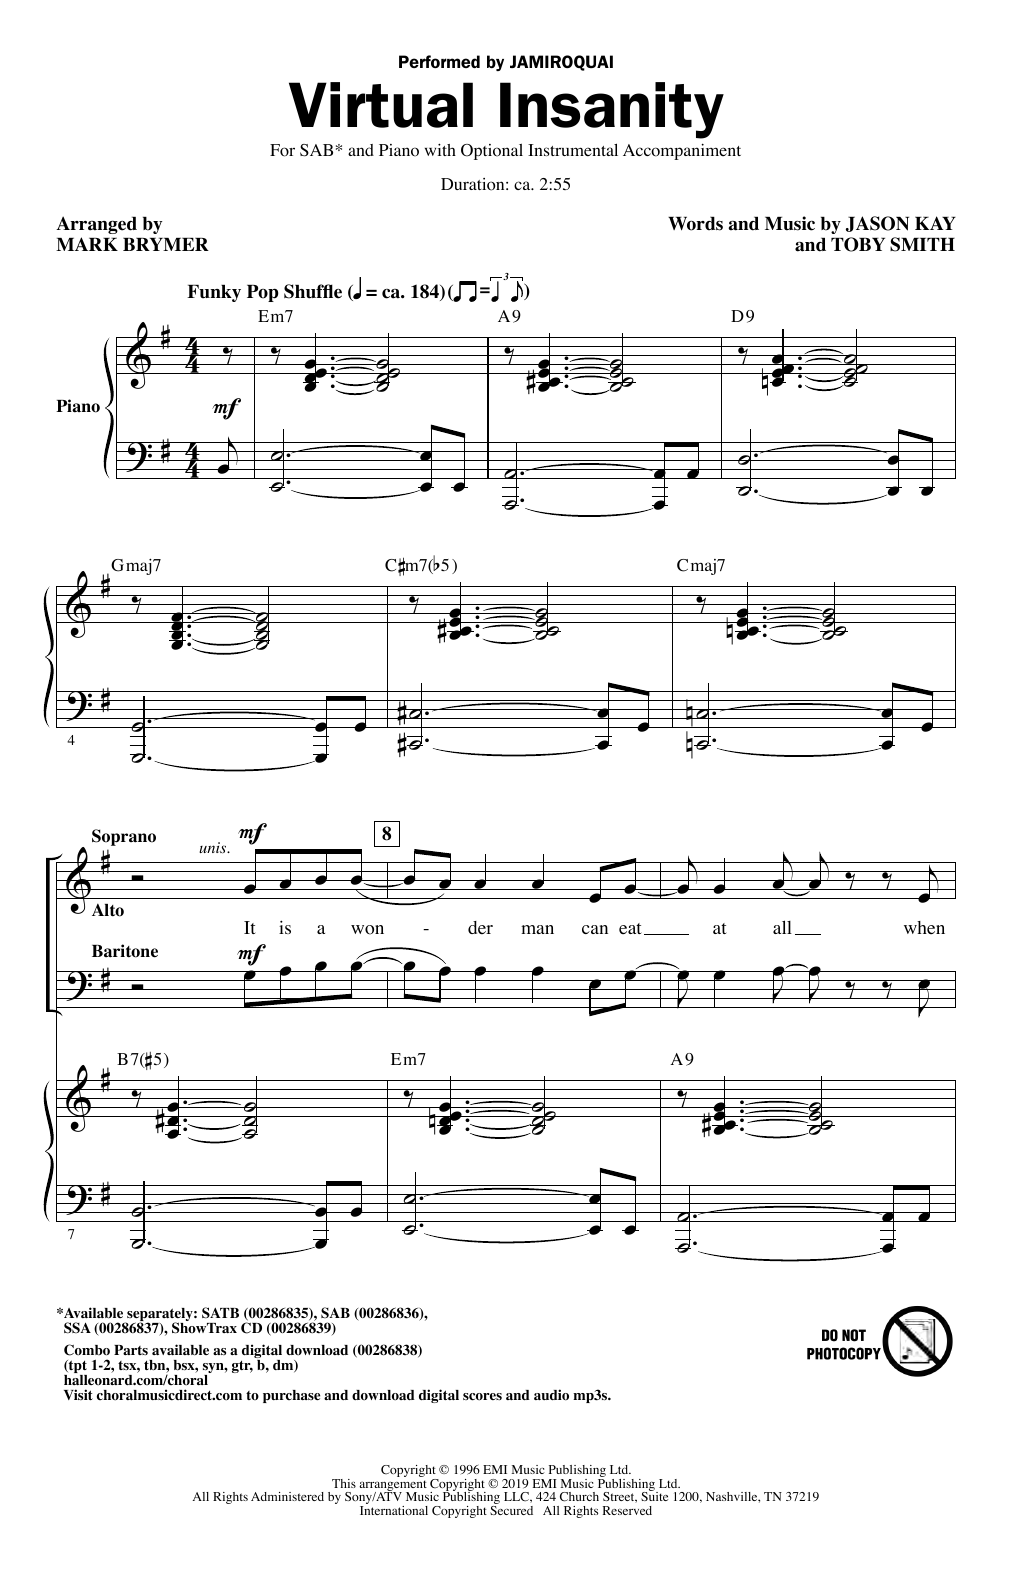 Jamiroquai Virtual Insanity (arr. Mark Brymer) Sheet Music Notes & Chords for SATB Choir - Download or Print PDF